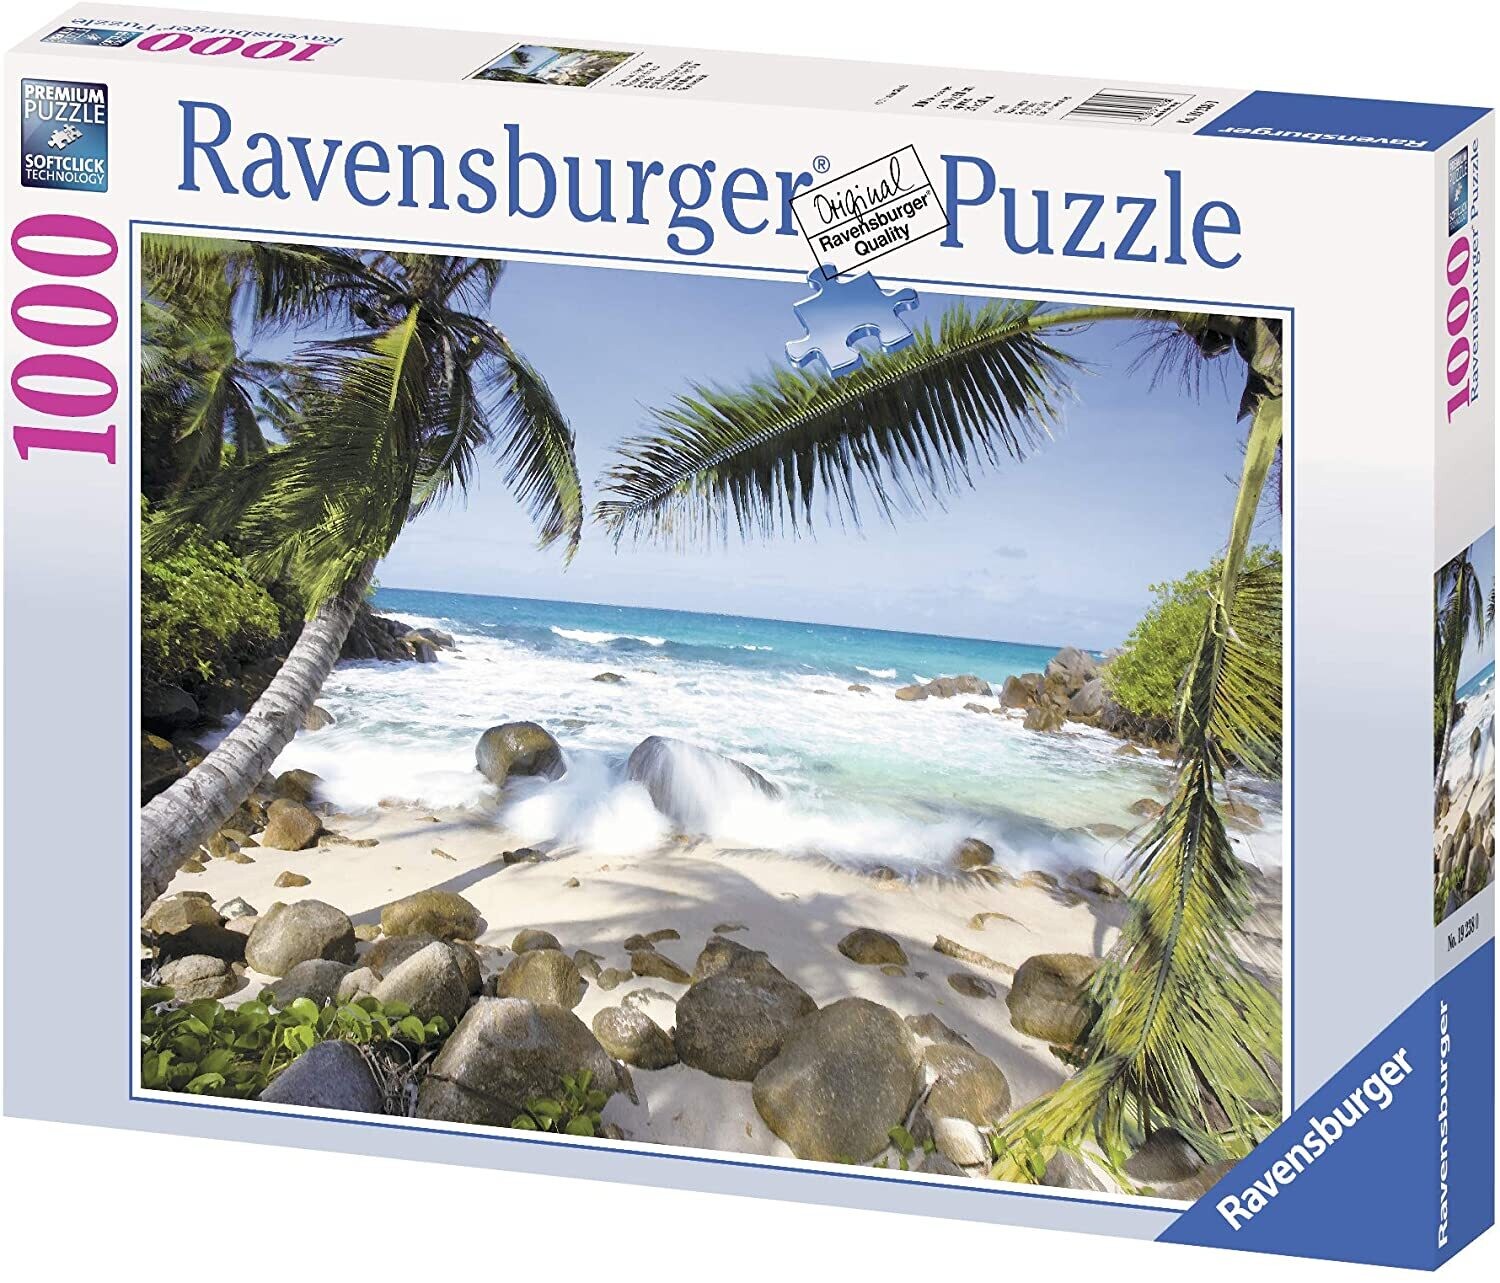 Ravensburger 19238 Seaside Beauty Puzzle